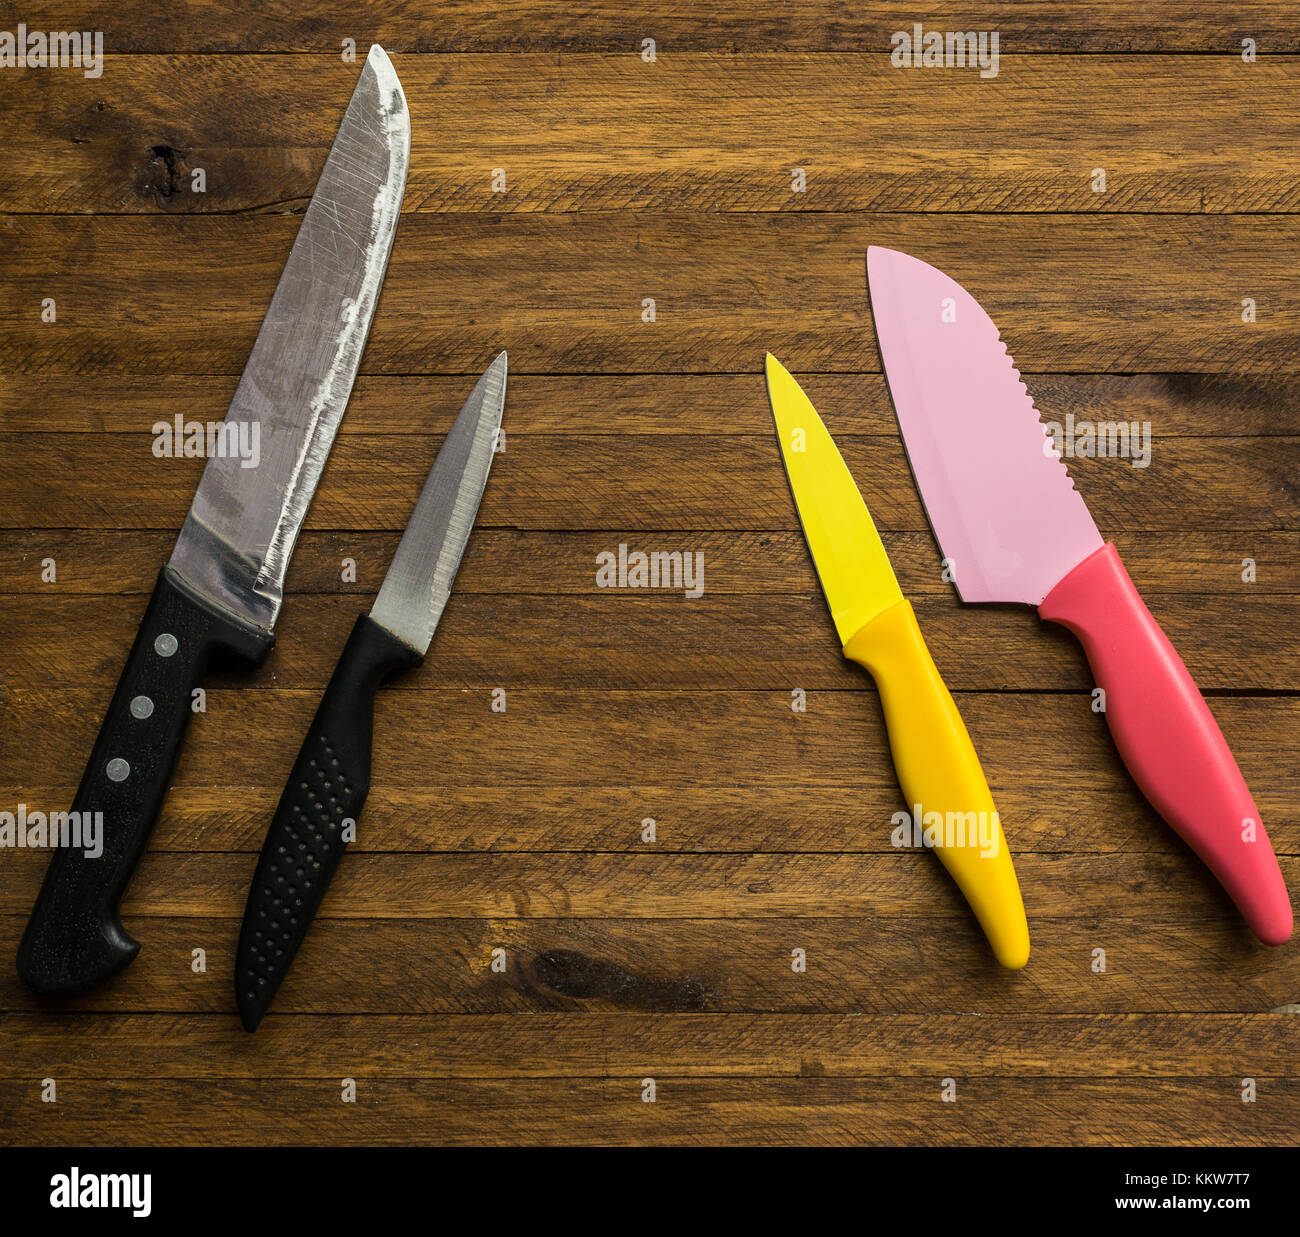 Cooking knives fotografías e imágenes de alta resolución - Alamy